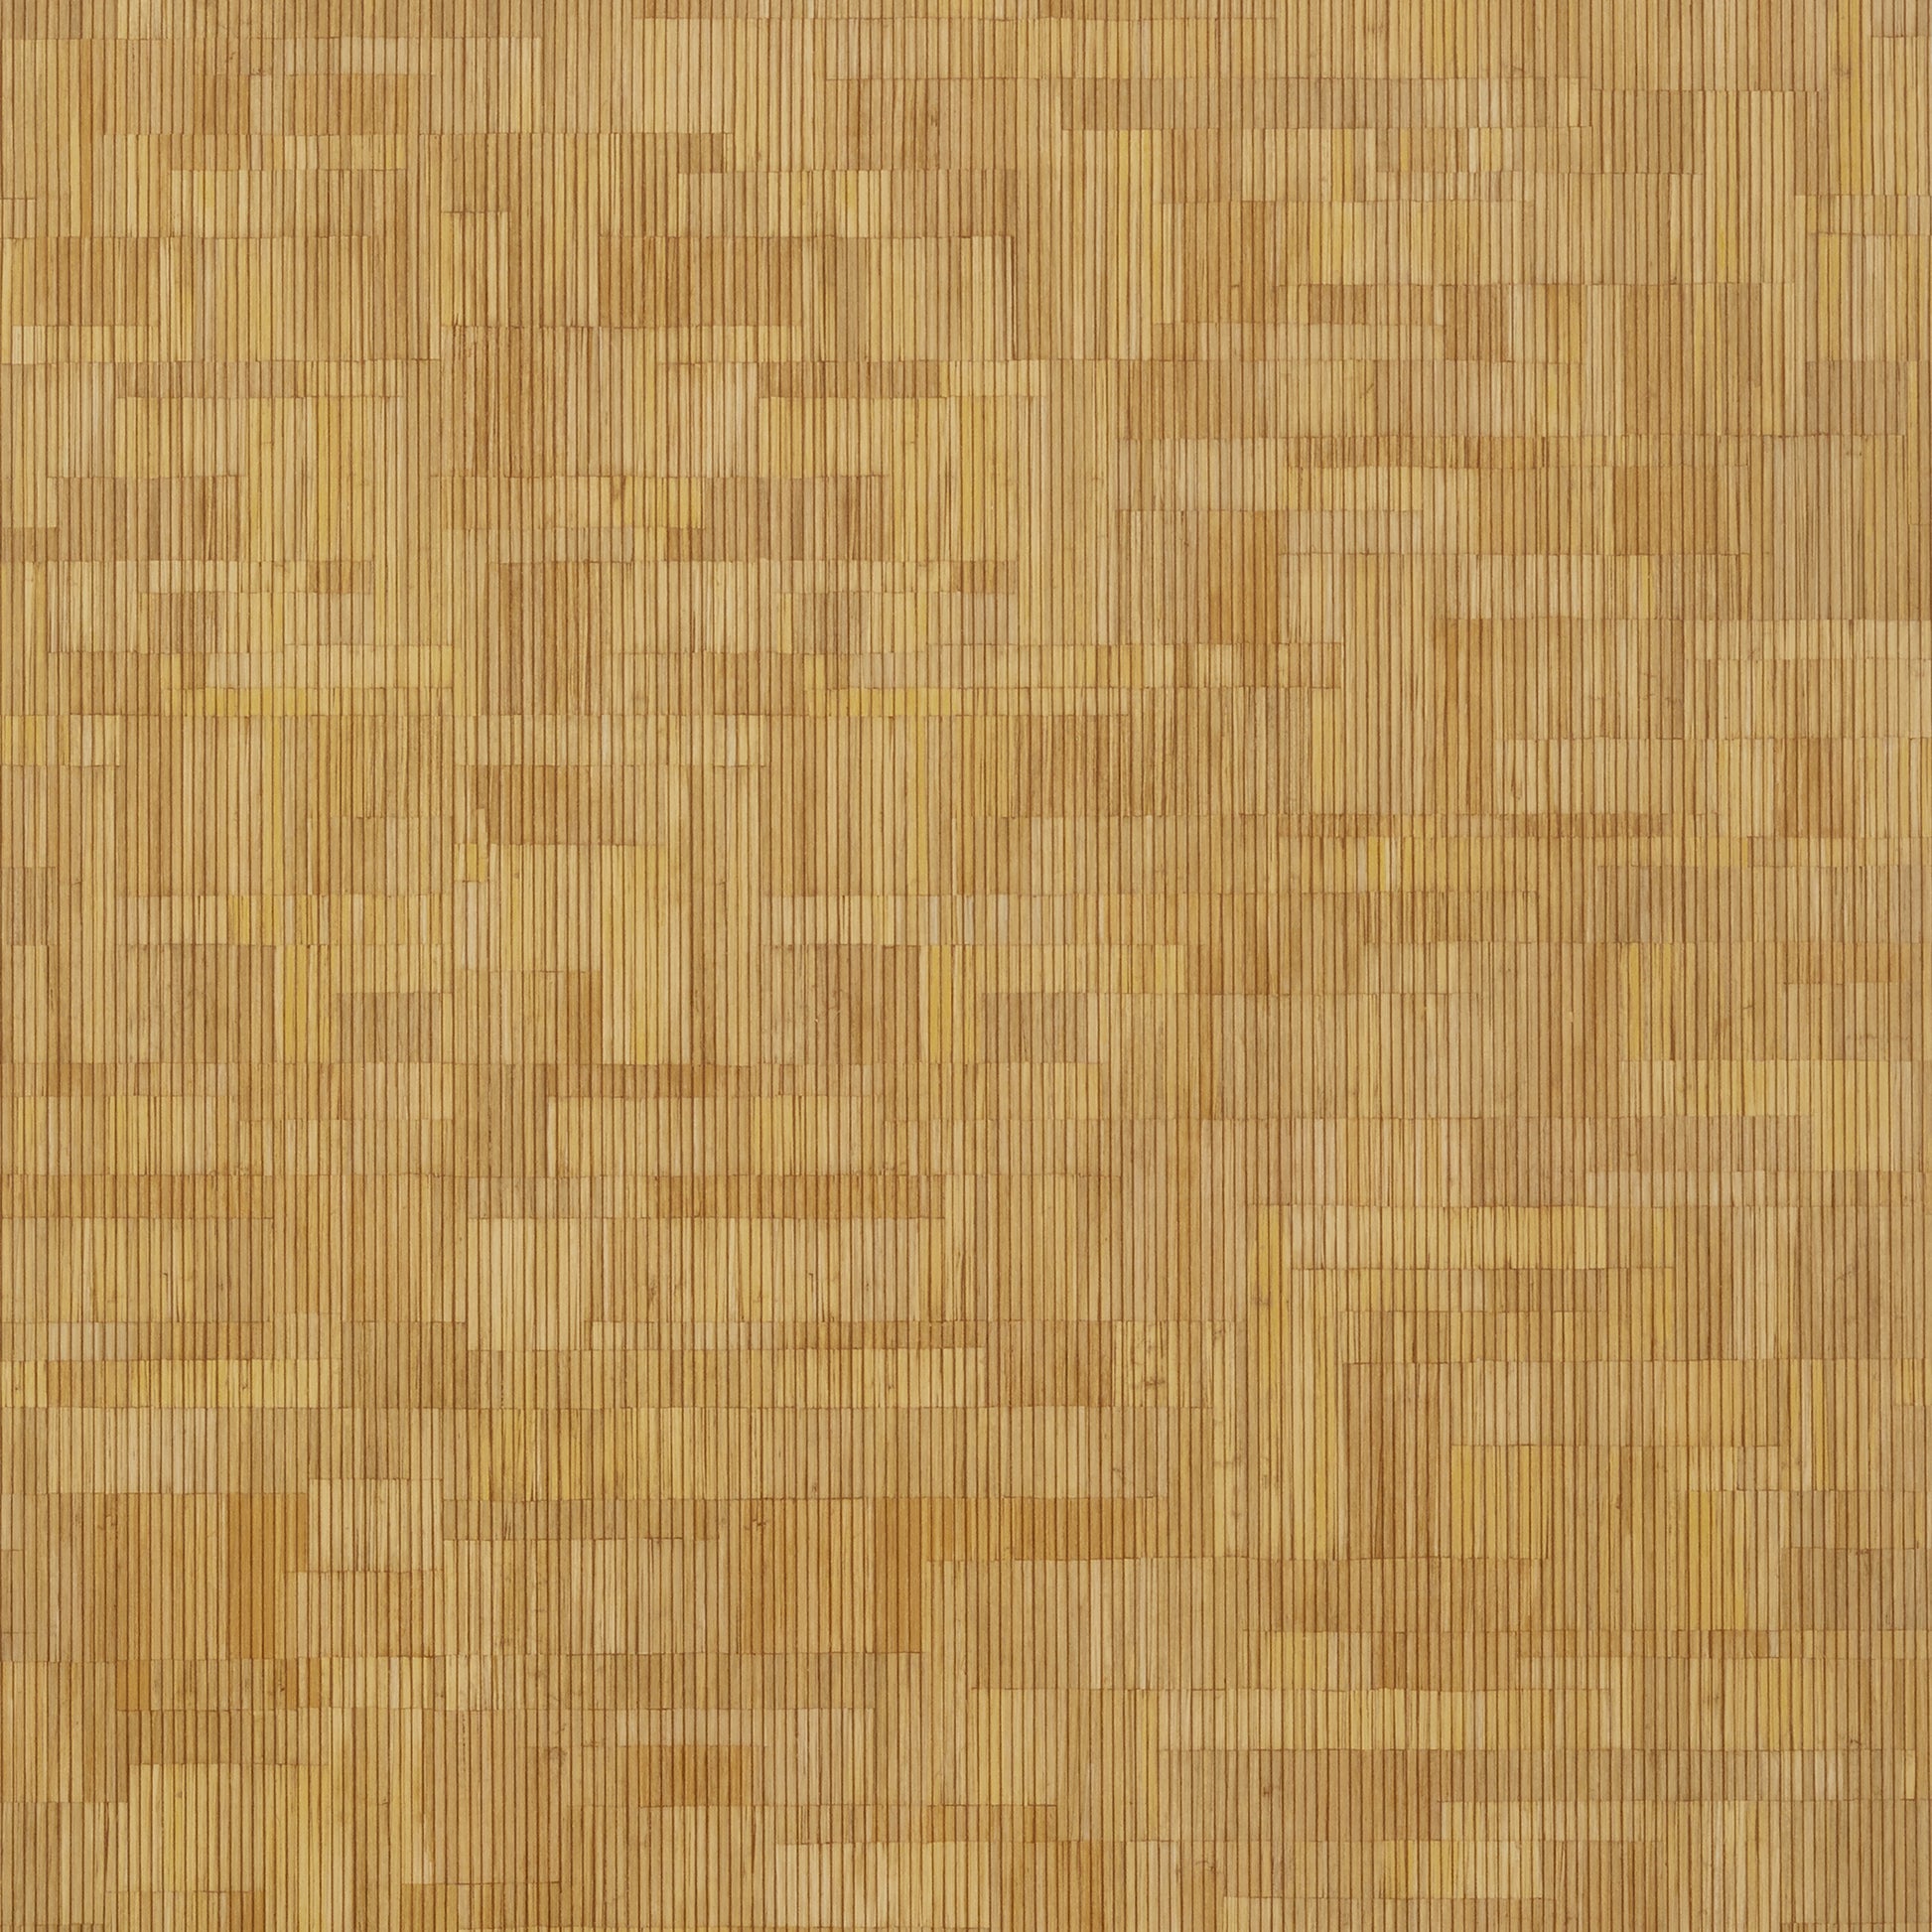 Purchase Thibaut Wallpaper SKU# T41022 pattern name Bamboo Mosaic color Natural. 